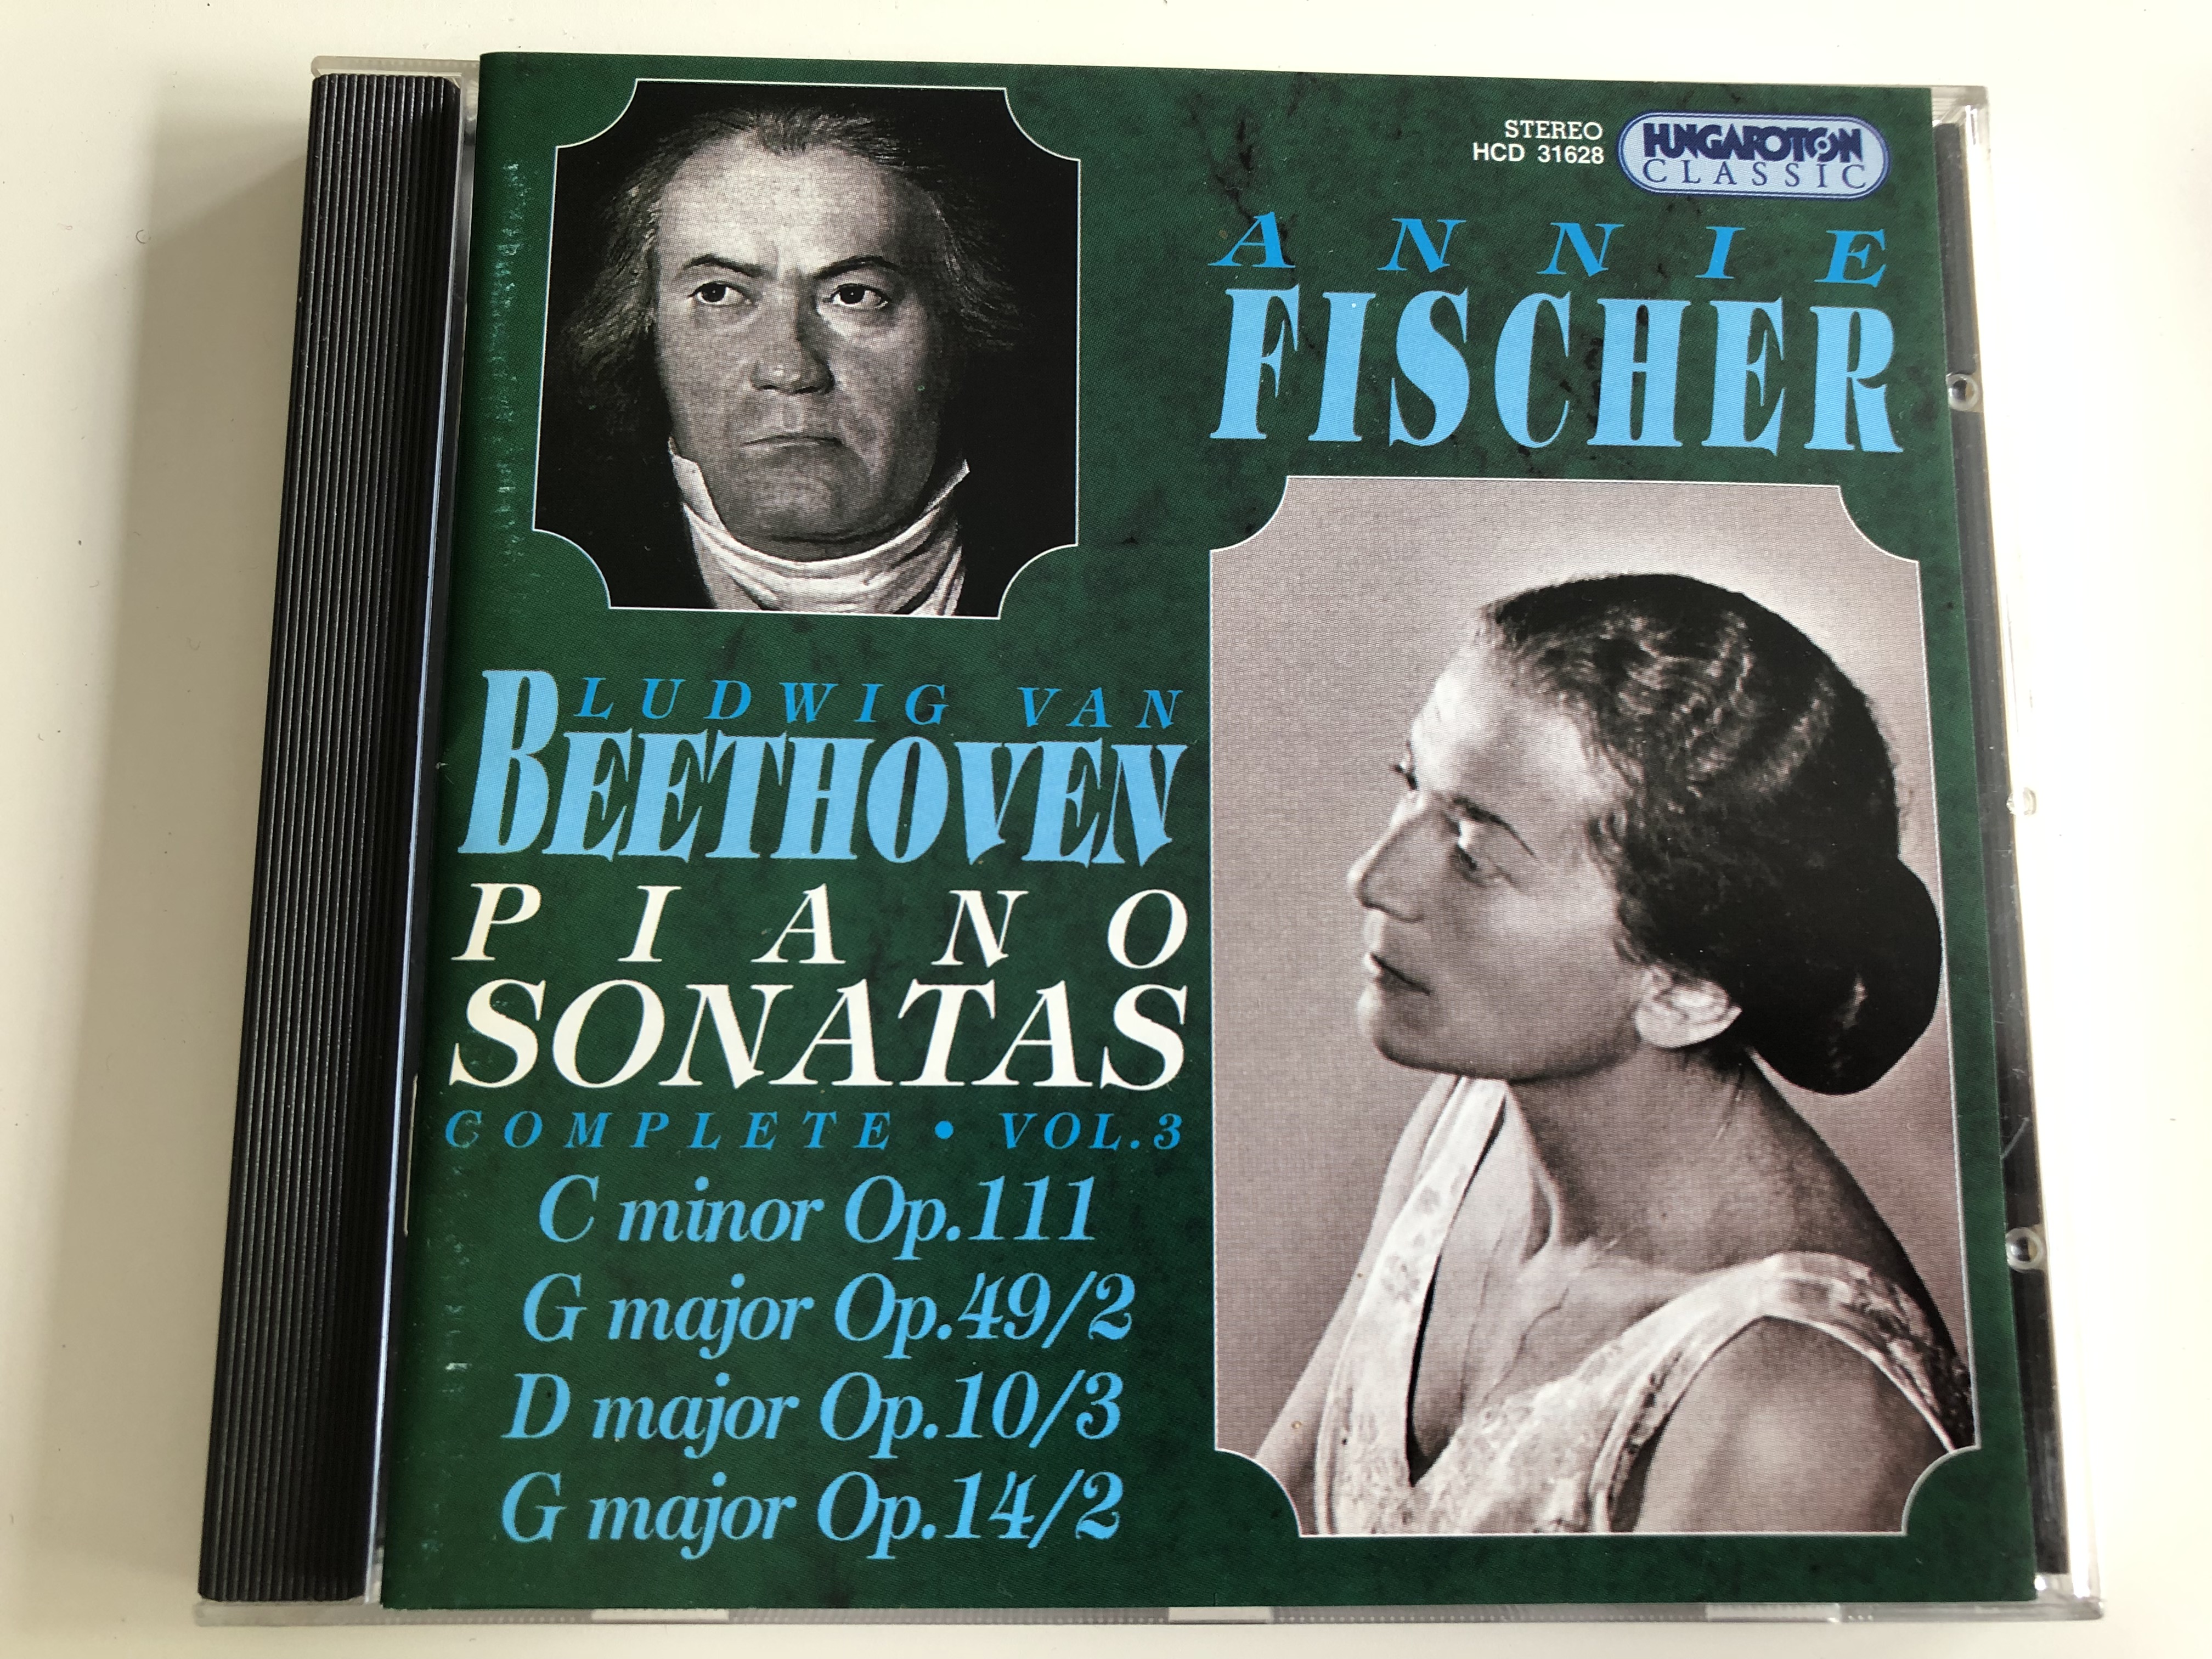 annie-fischer-ludwig-van-beethoven-piano-sonatas-complete-vol.-3-audio-cd-1996-hungaroton-classic-hcd-31628-1-.jpg